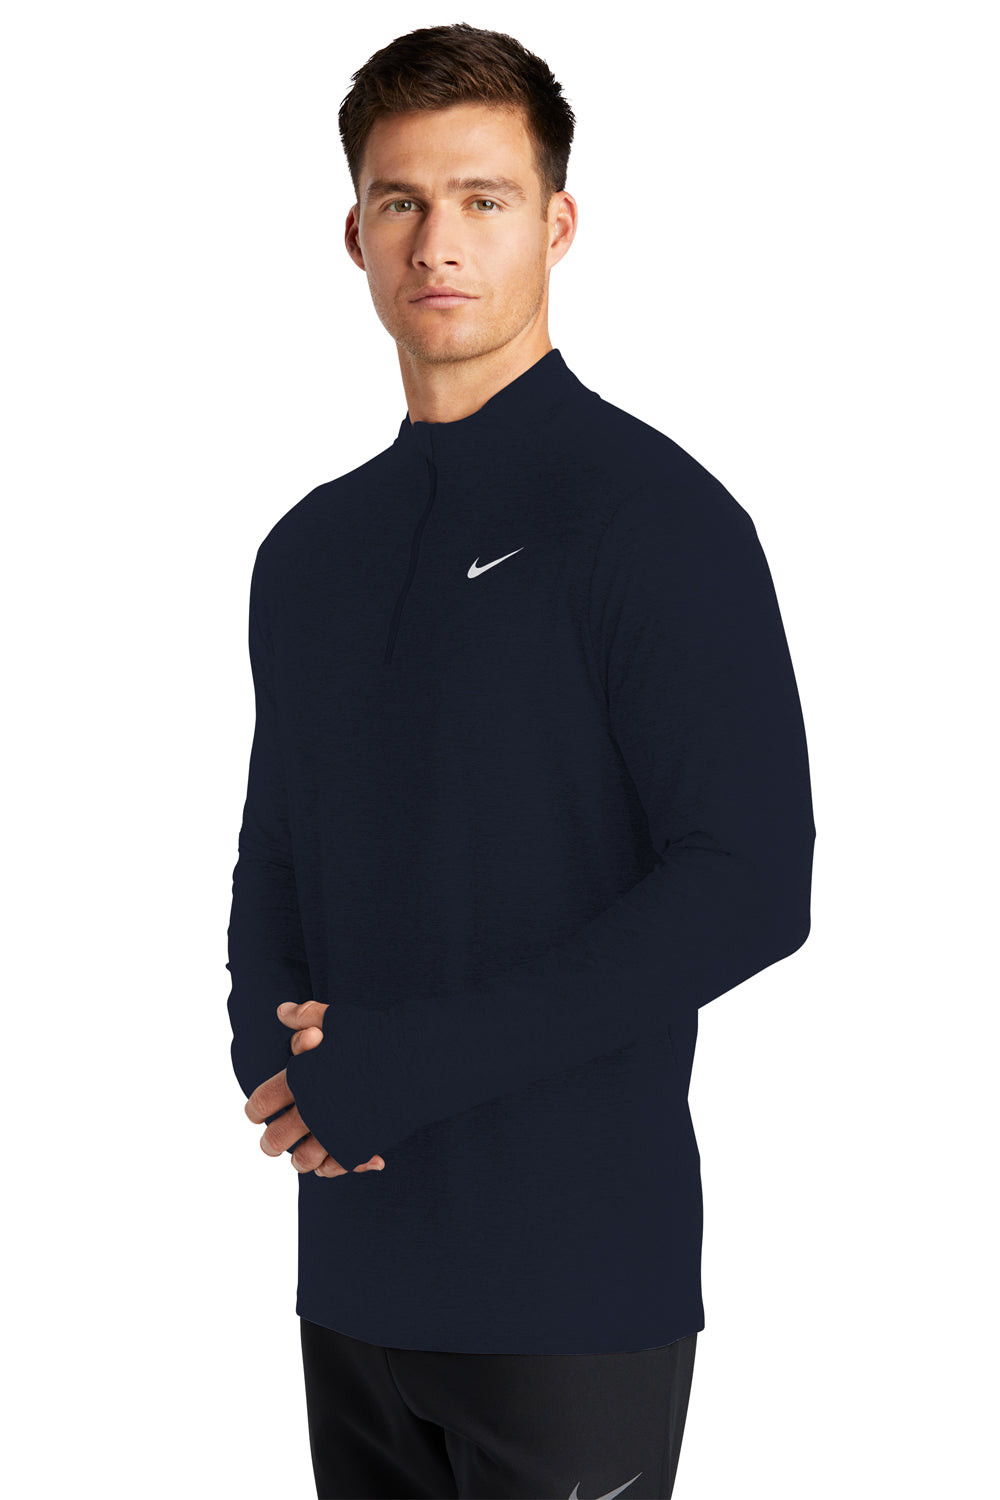 Nike NKDH4949 Mens Element Dri-Fit Moisture Wicking 1/4 Zip Sweatshirt Navy Blue Model 3Q